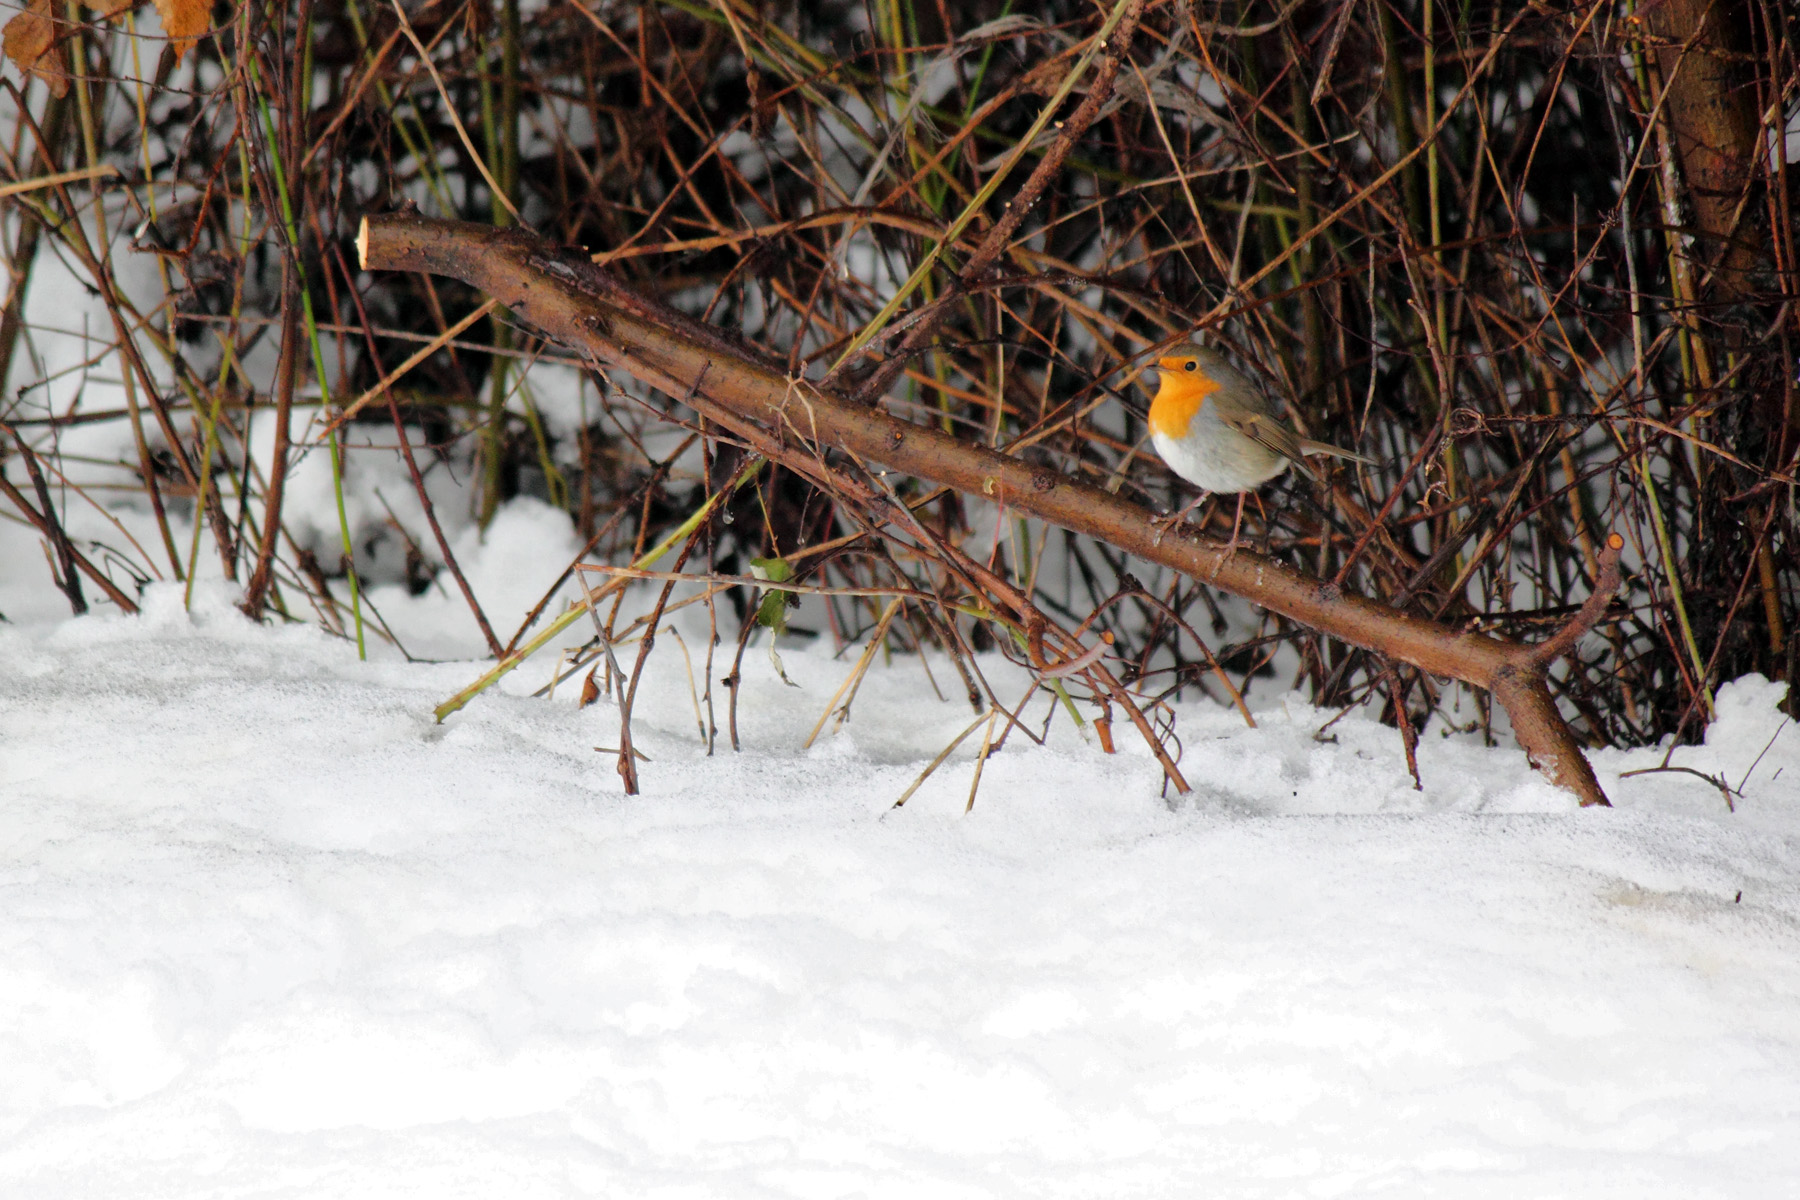 Robin in a snowy day...